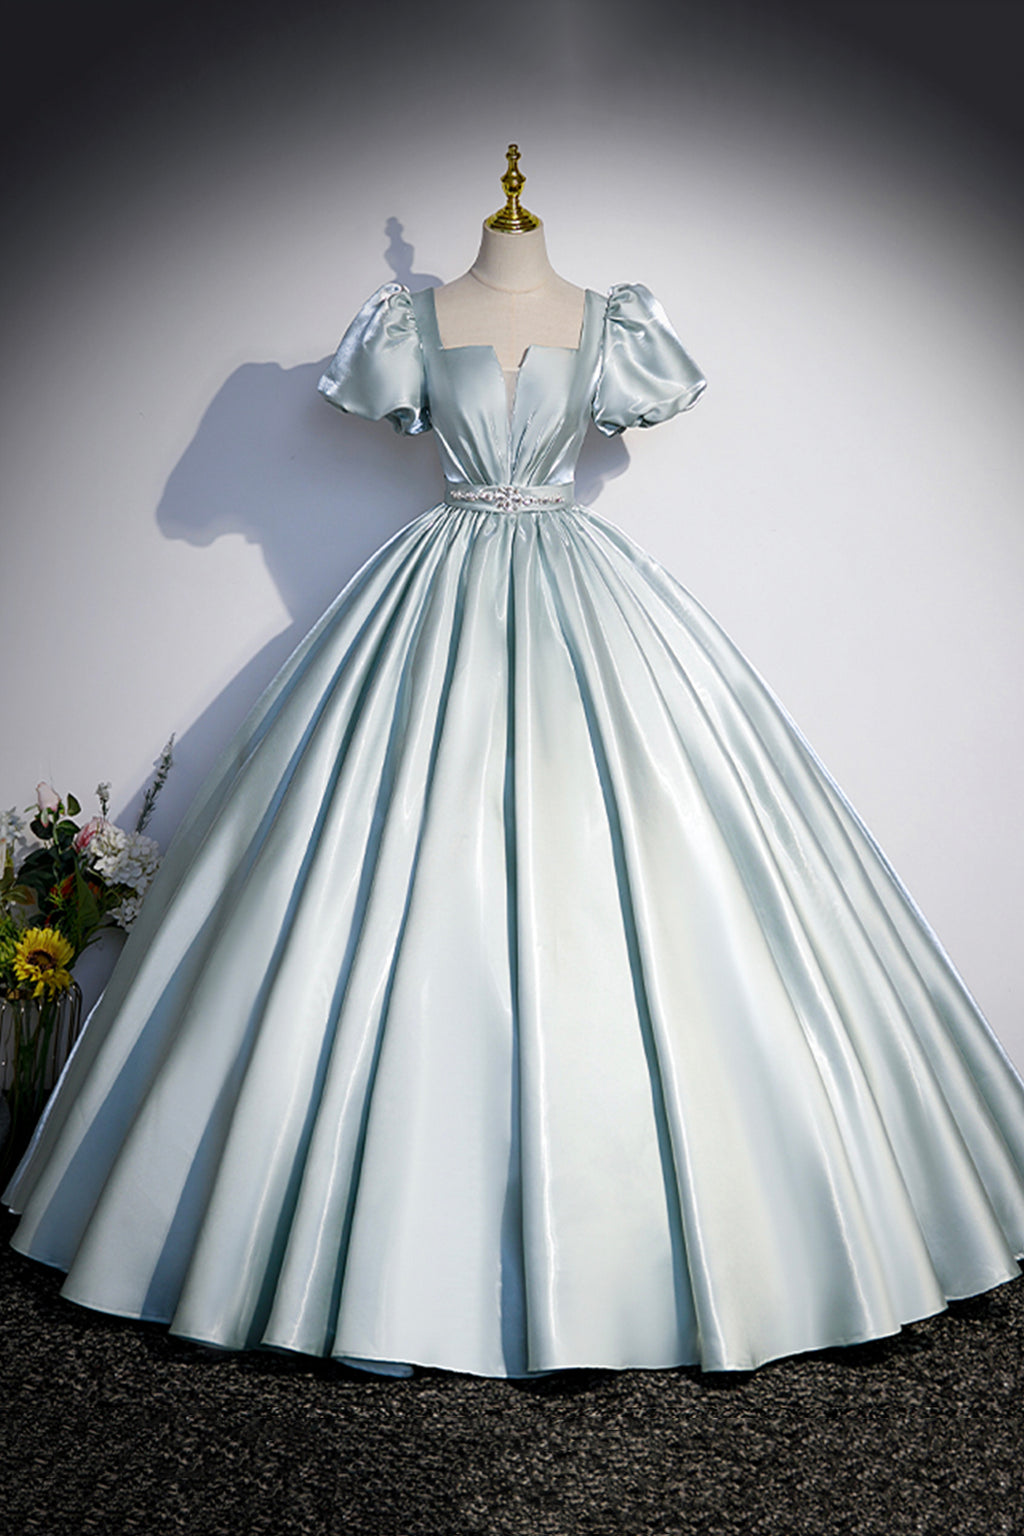 Elegant Blue Satin Prom Dresses, Square Neckline Puffy Short Sleeve Bow  Backless Floor-Length Formal Dresses